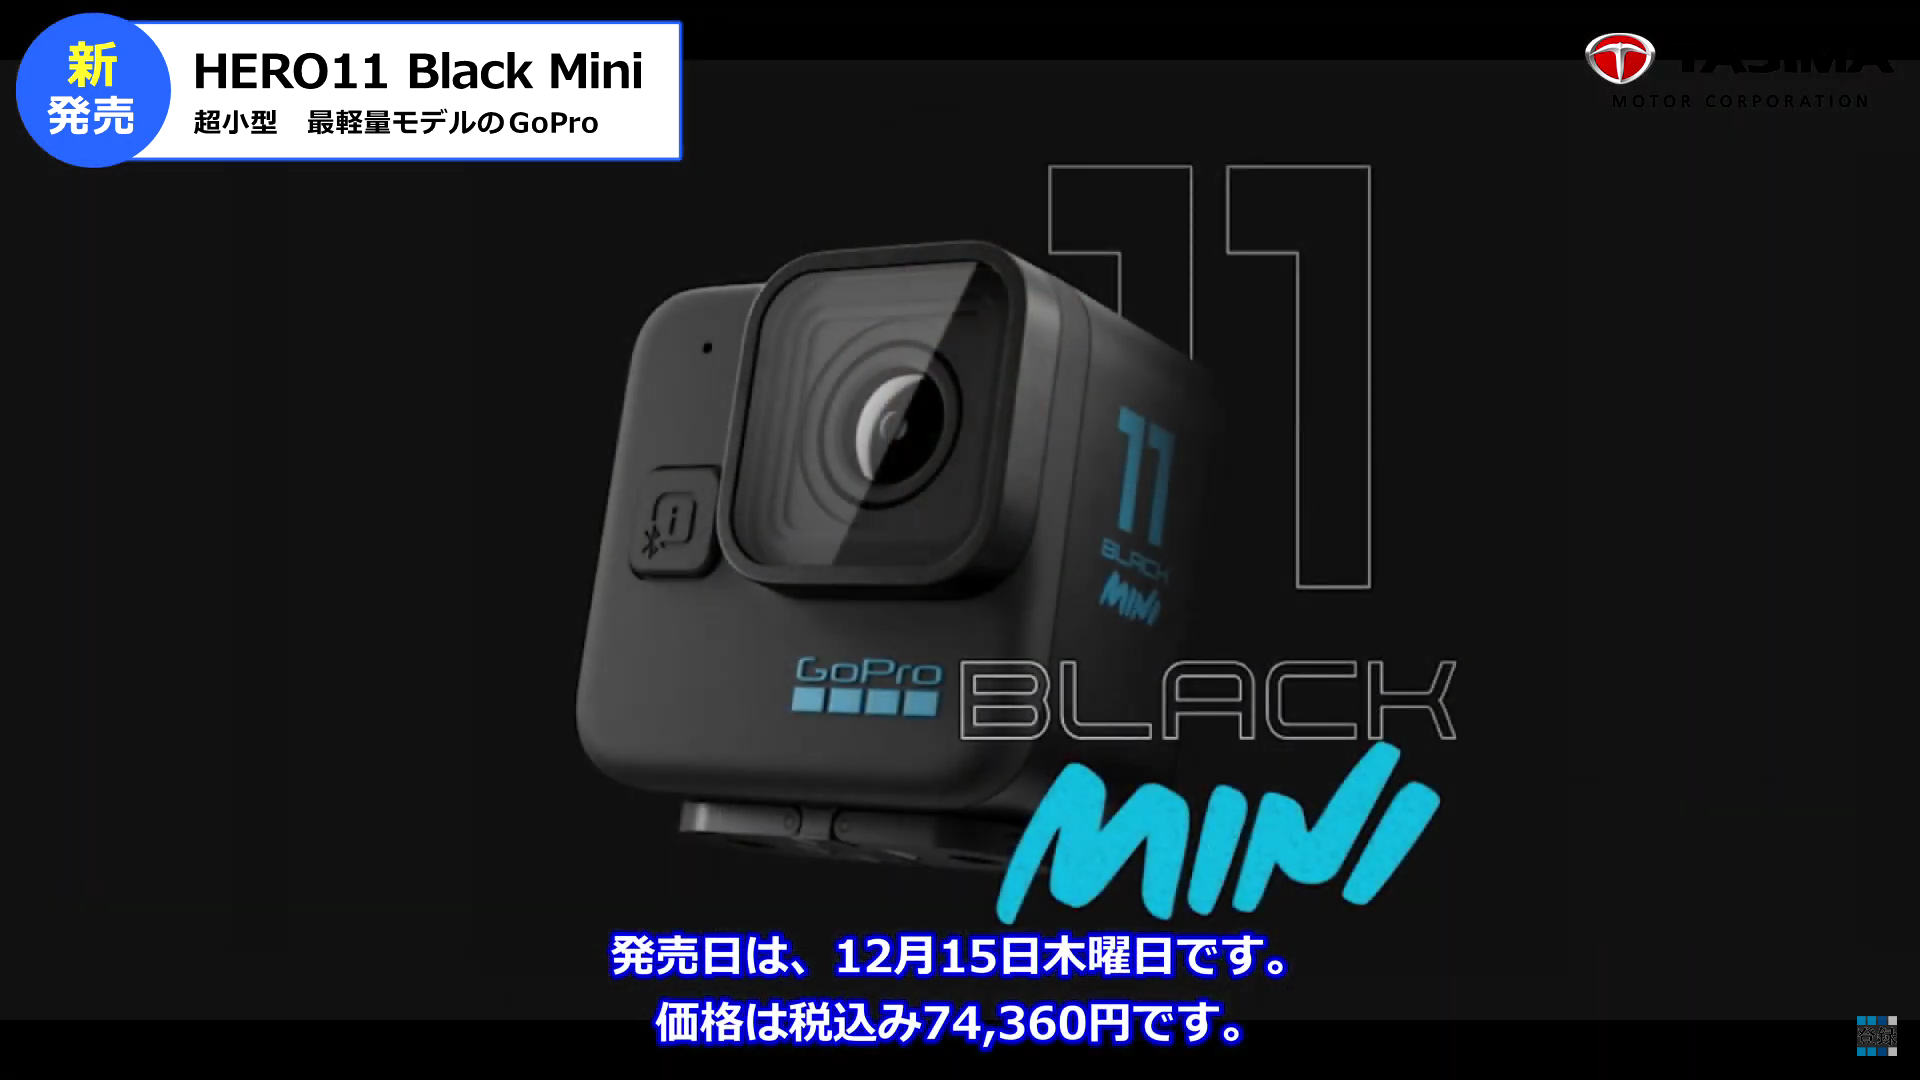 GoPro HERO11 Black Mini 値段